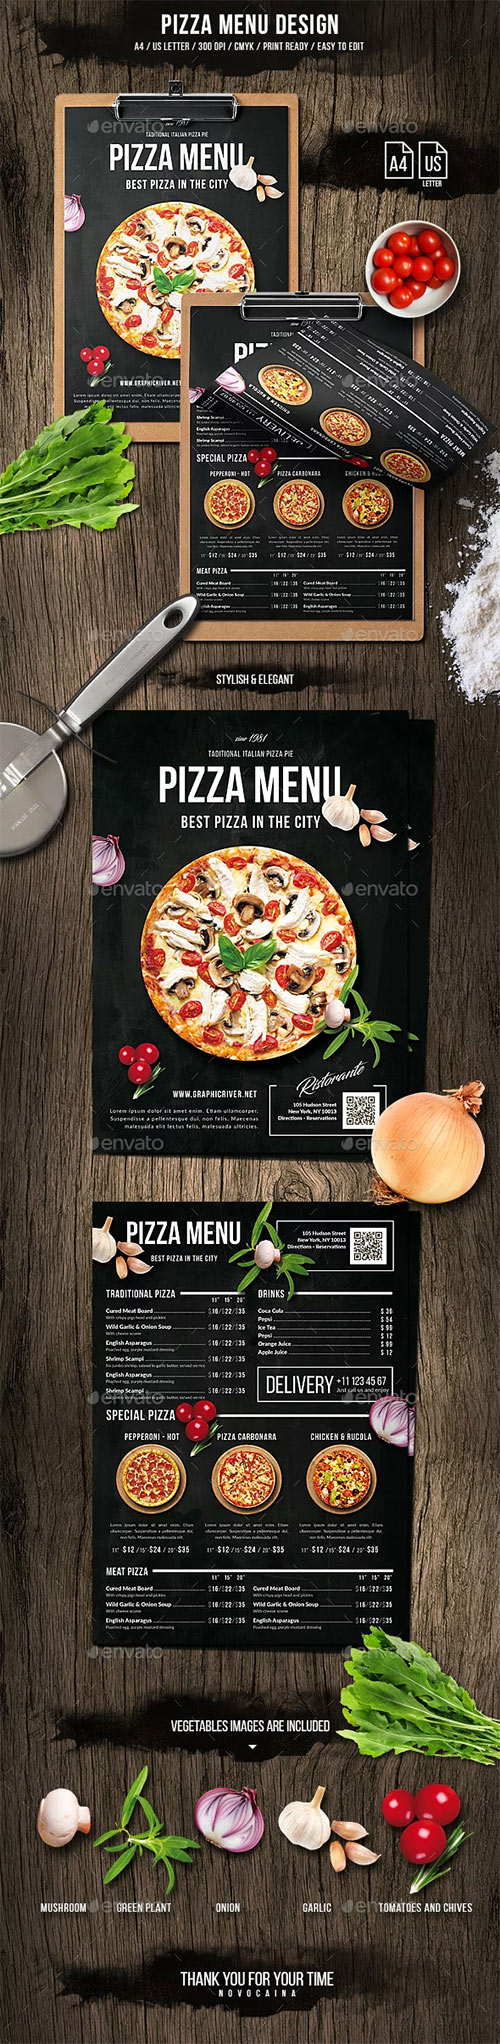 Pizza Menu Design - A4 and US Letter 20035663